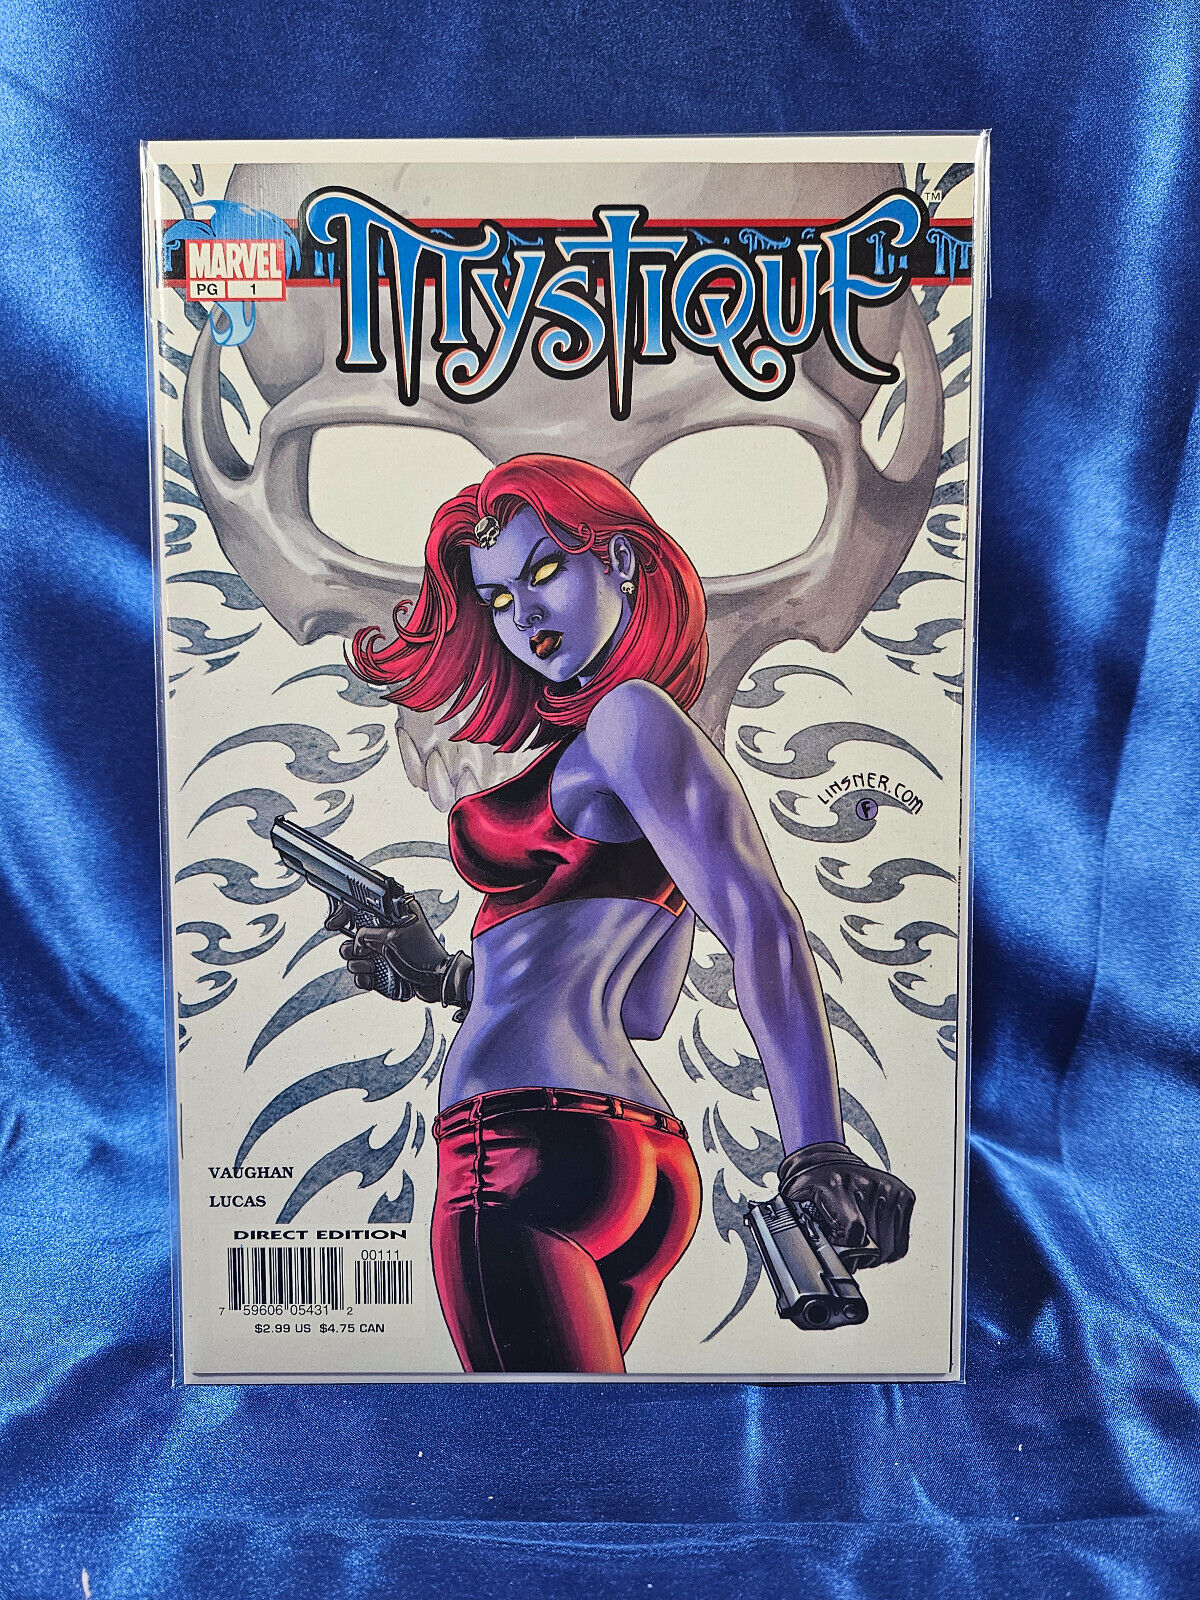 MYSTIQUE #1 VF+ 8.5 Linsner Cover, Marvel Comics 2003